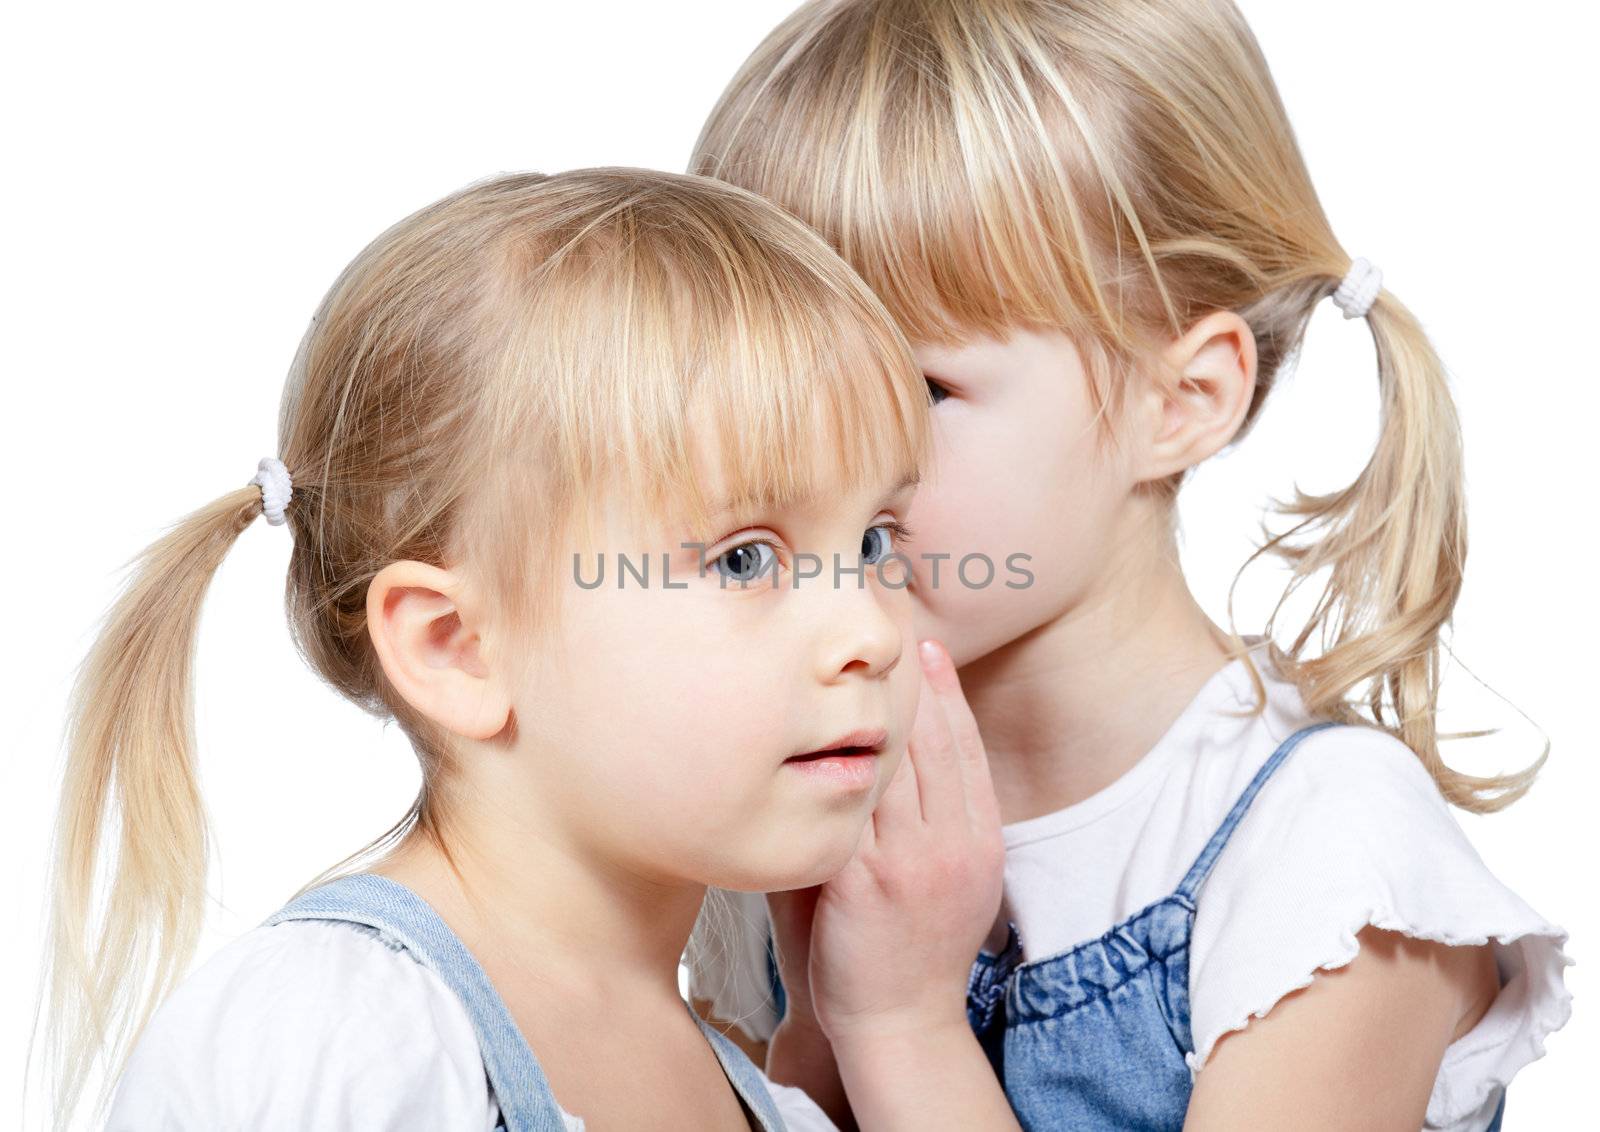 Little girls sharing a secret by naumoid